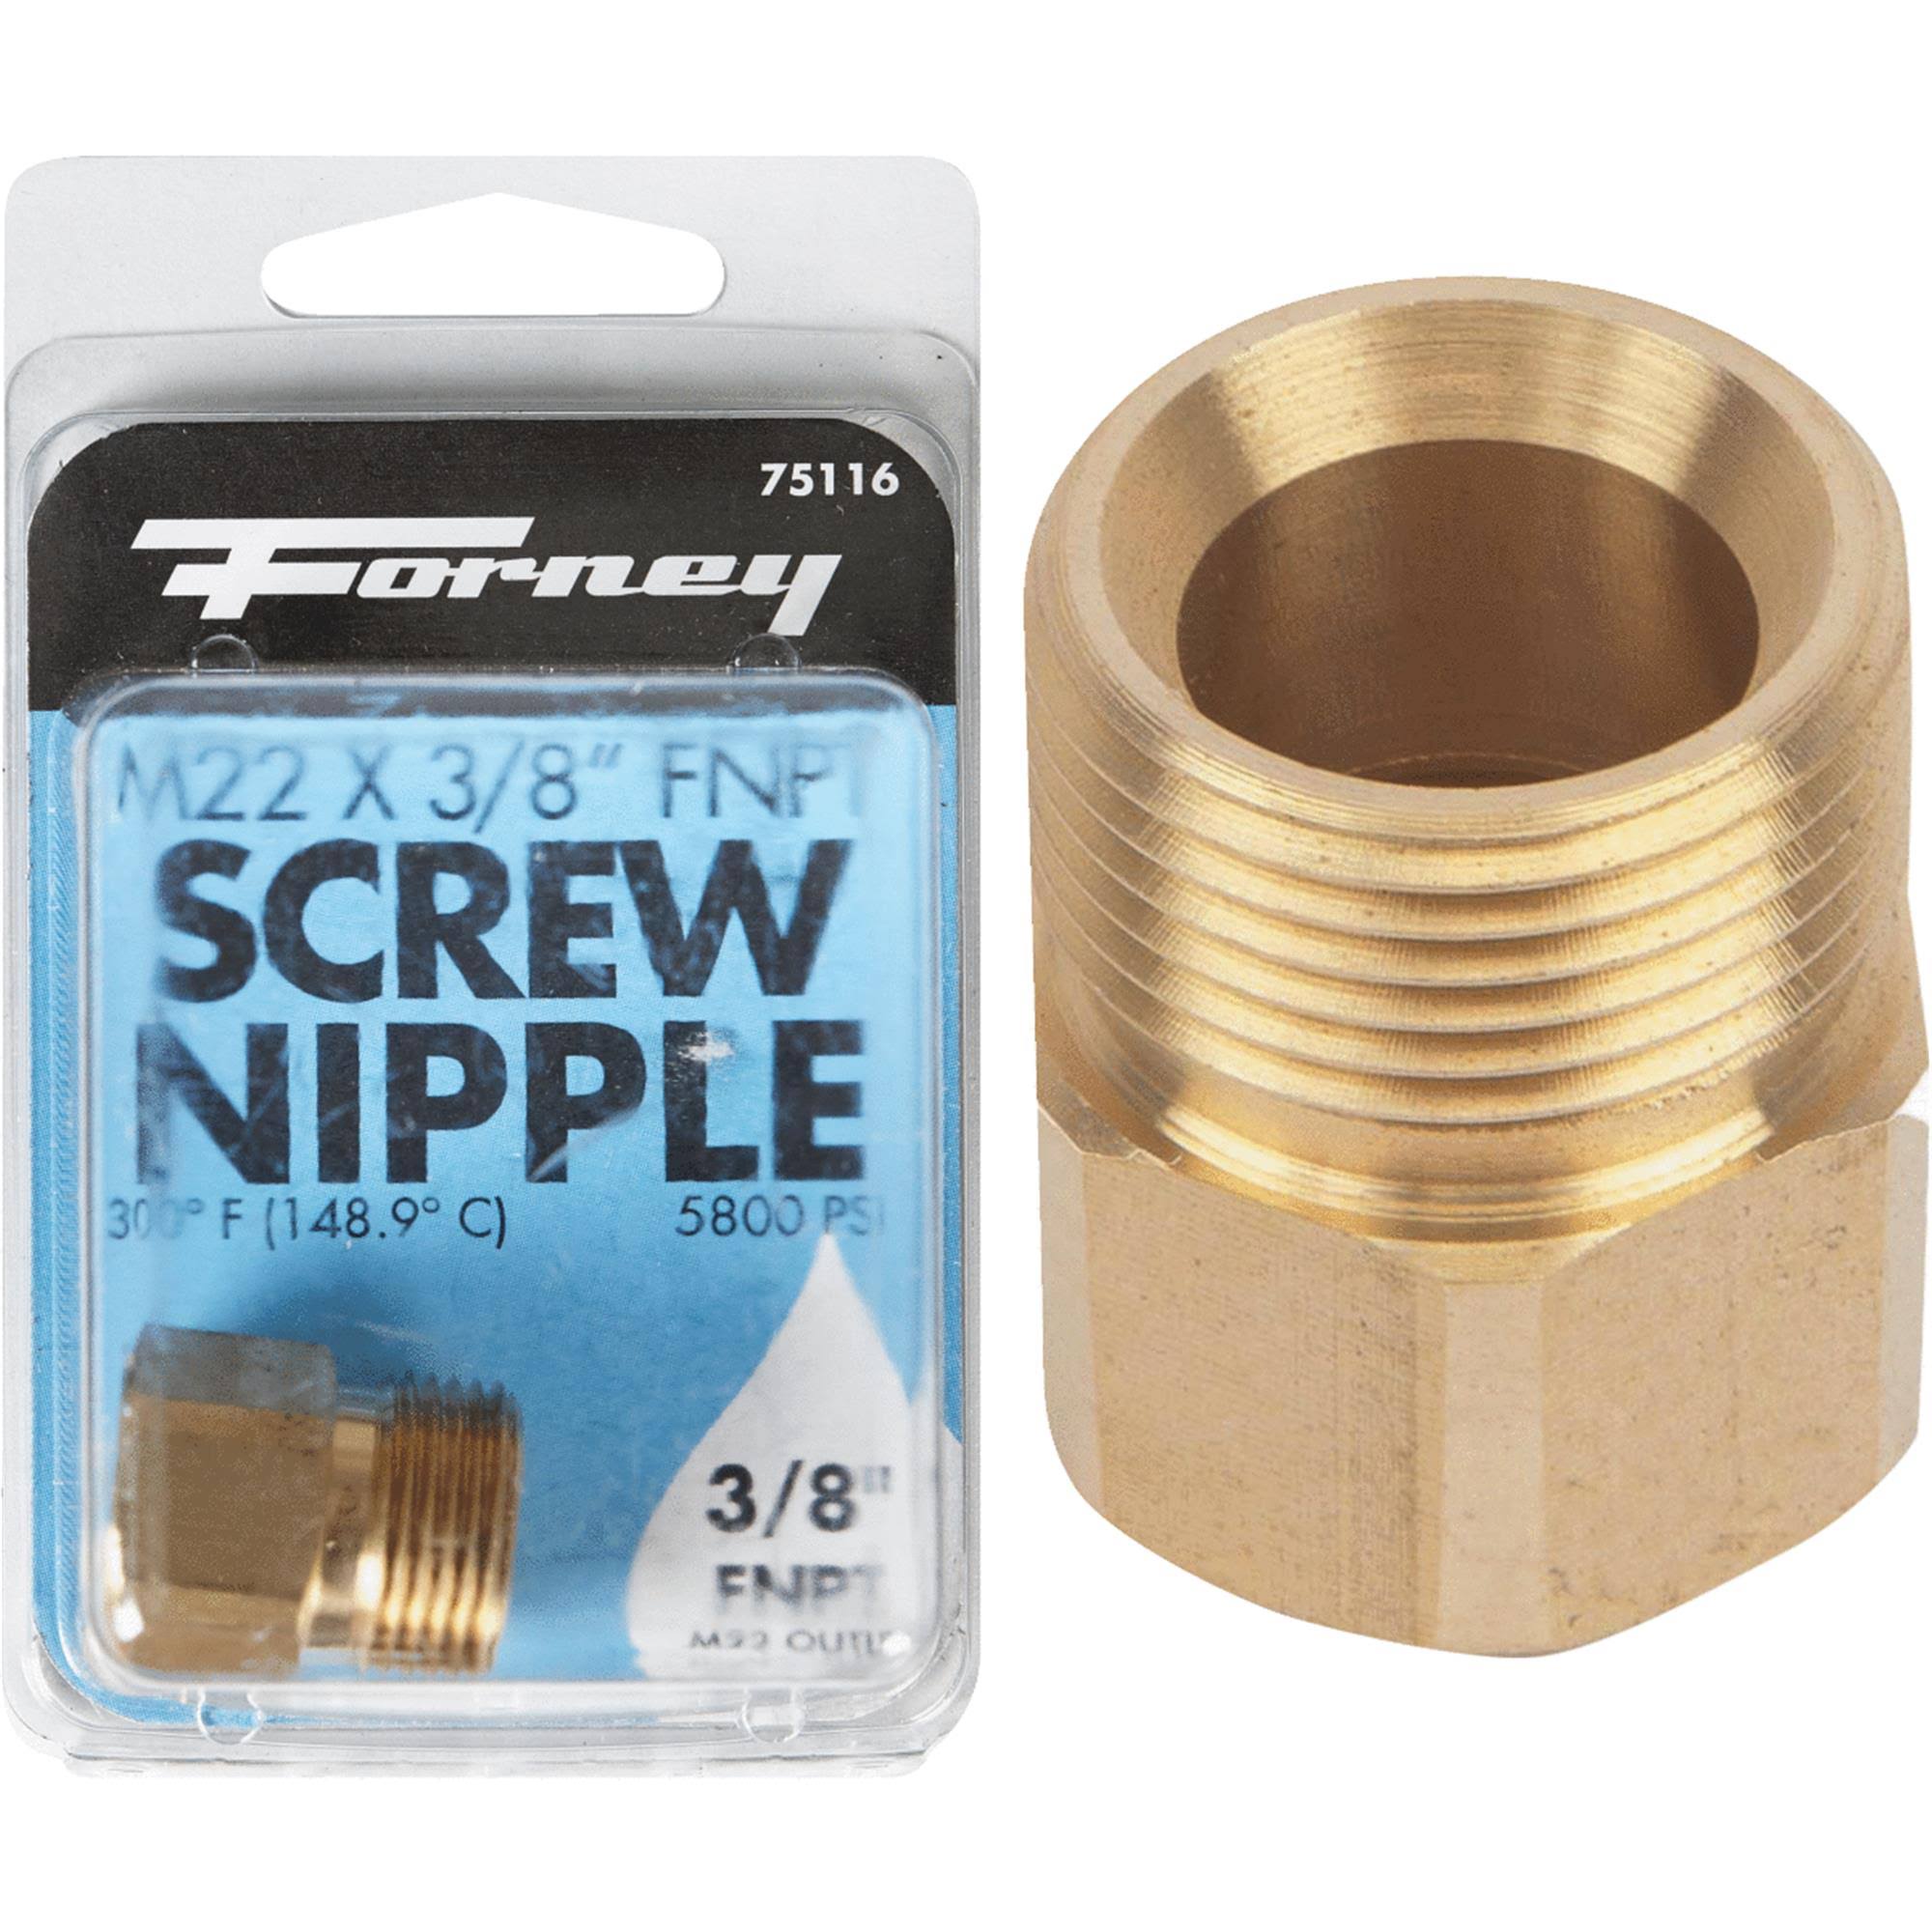 Forney 75116 Pressure Washer Female Screw Nipple - 3/8"